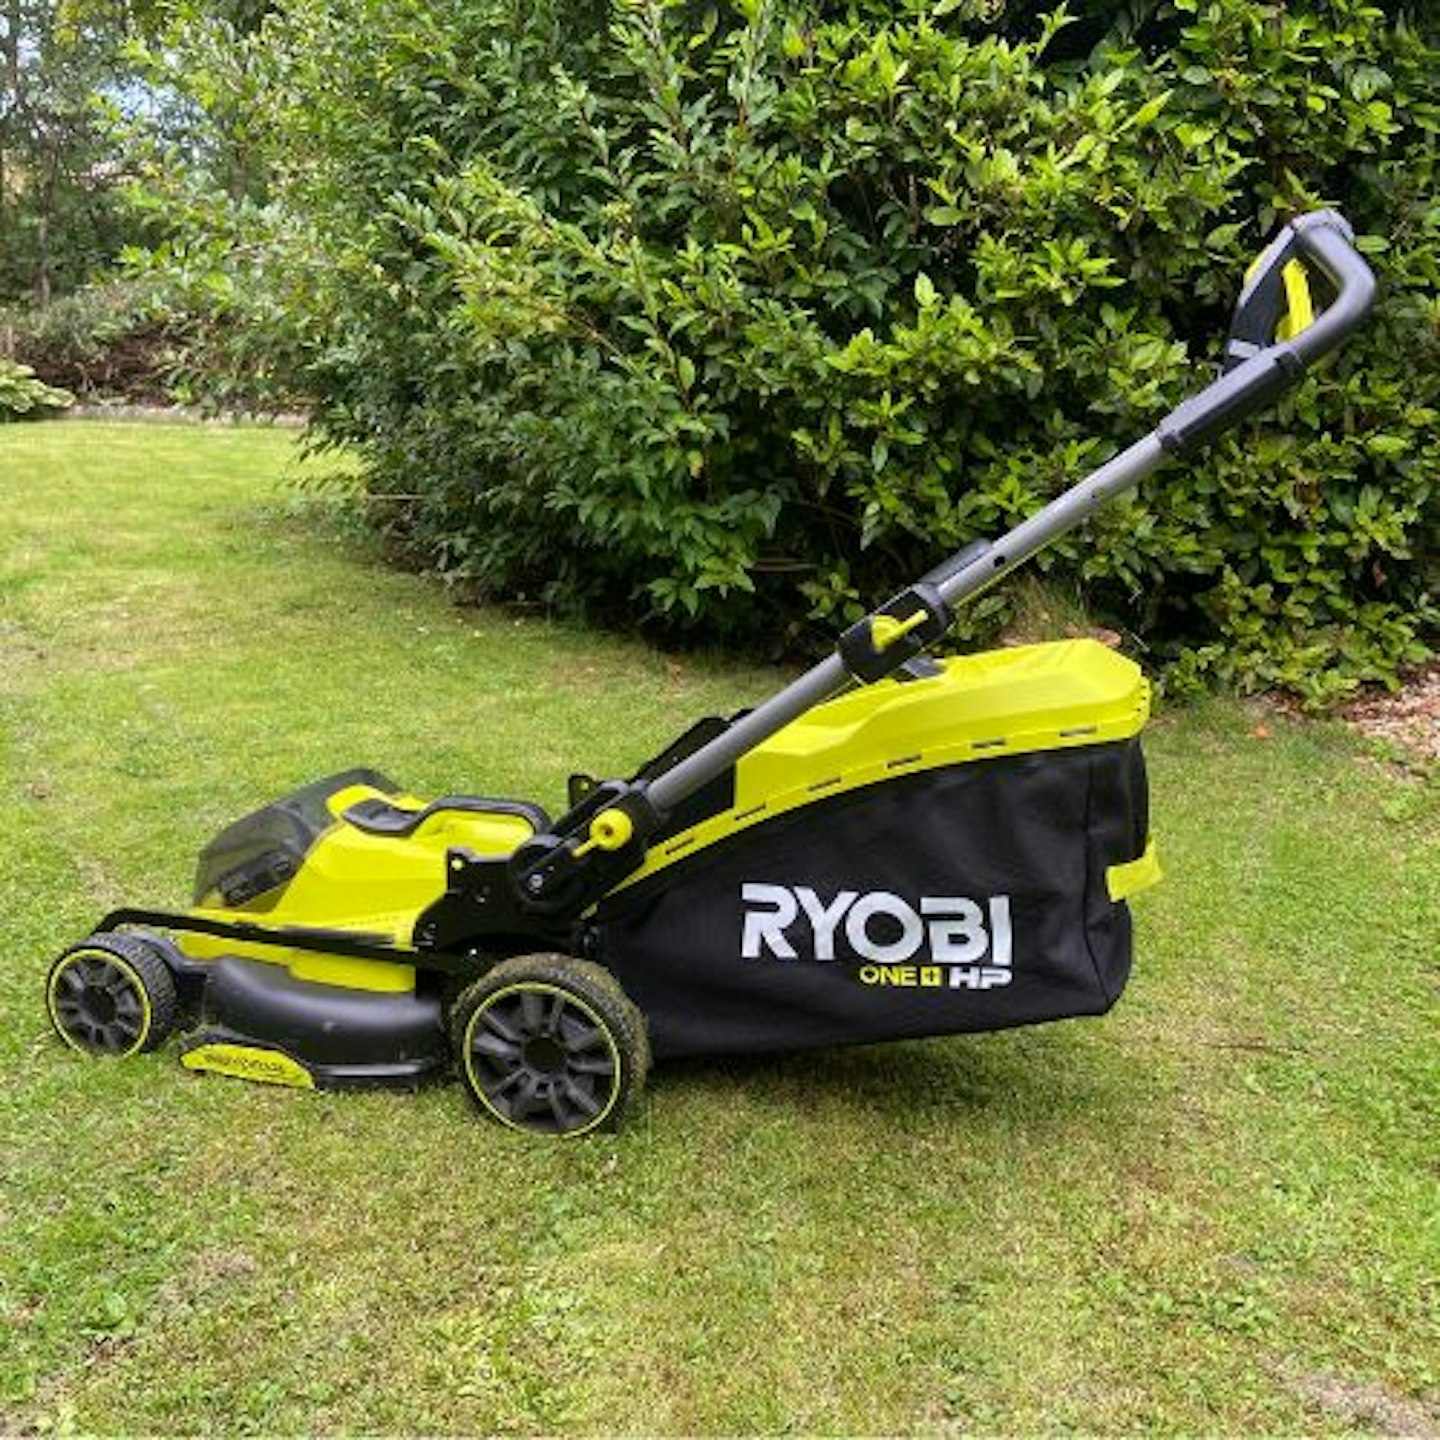 Testing the Ryobi 18V ONE+ Cordless Lawn Mower